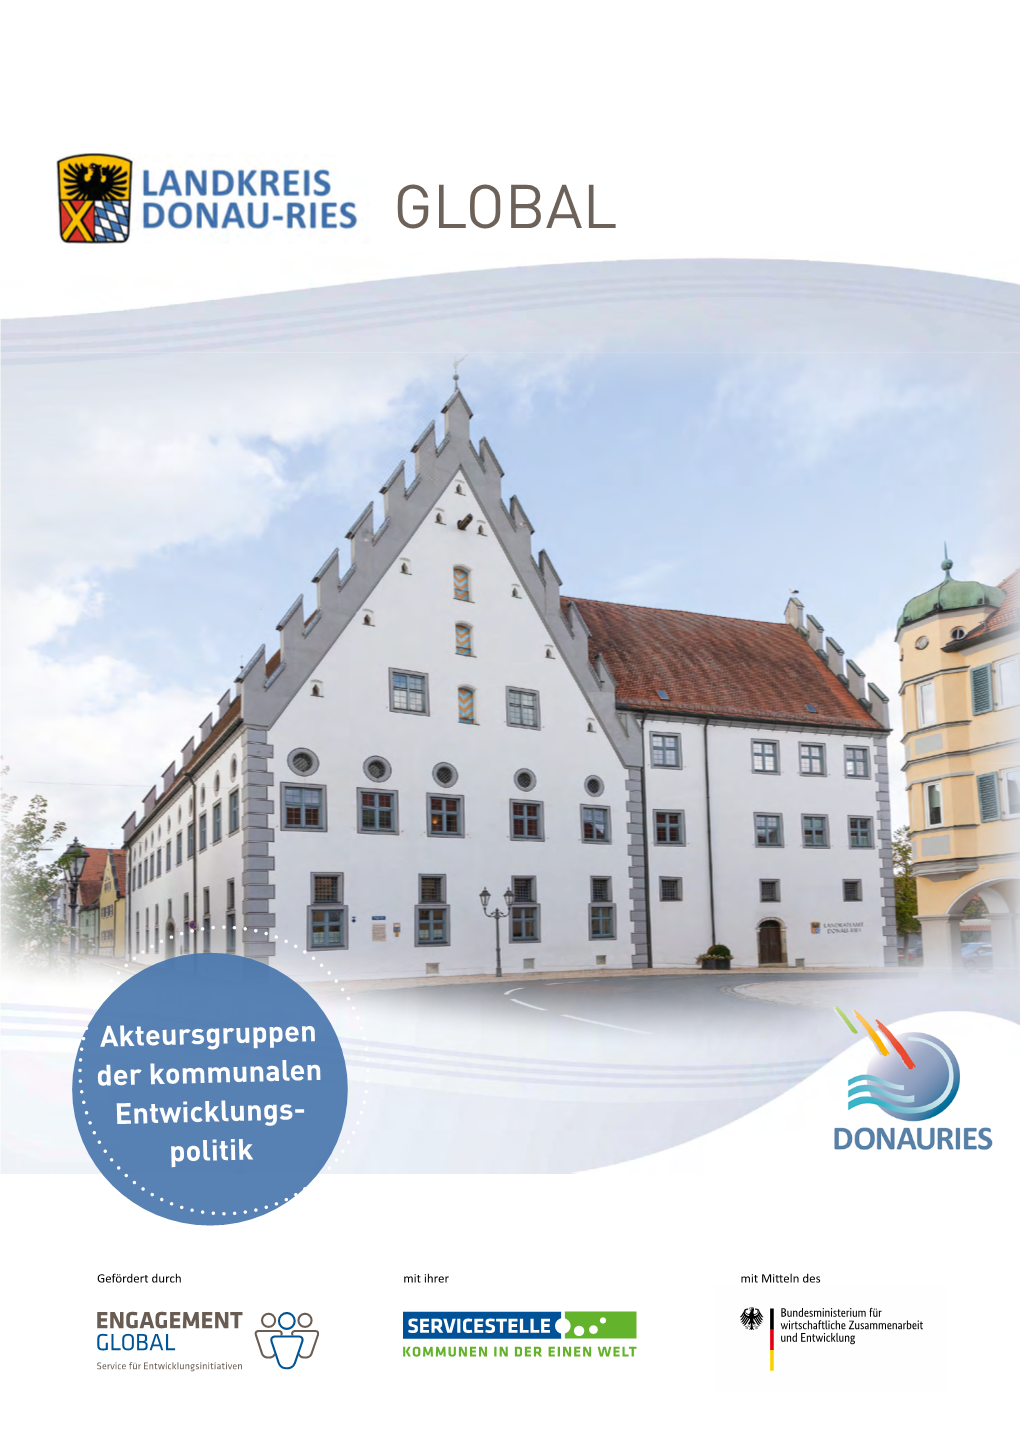 Landkreis Donau-Ries Global